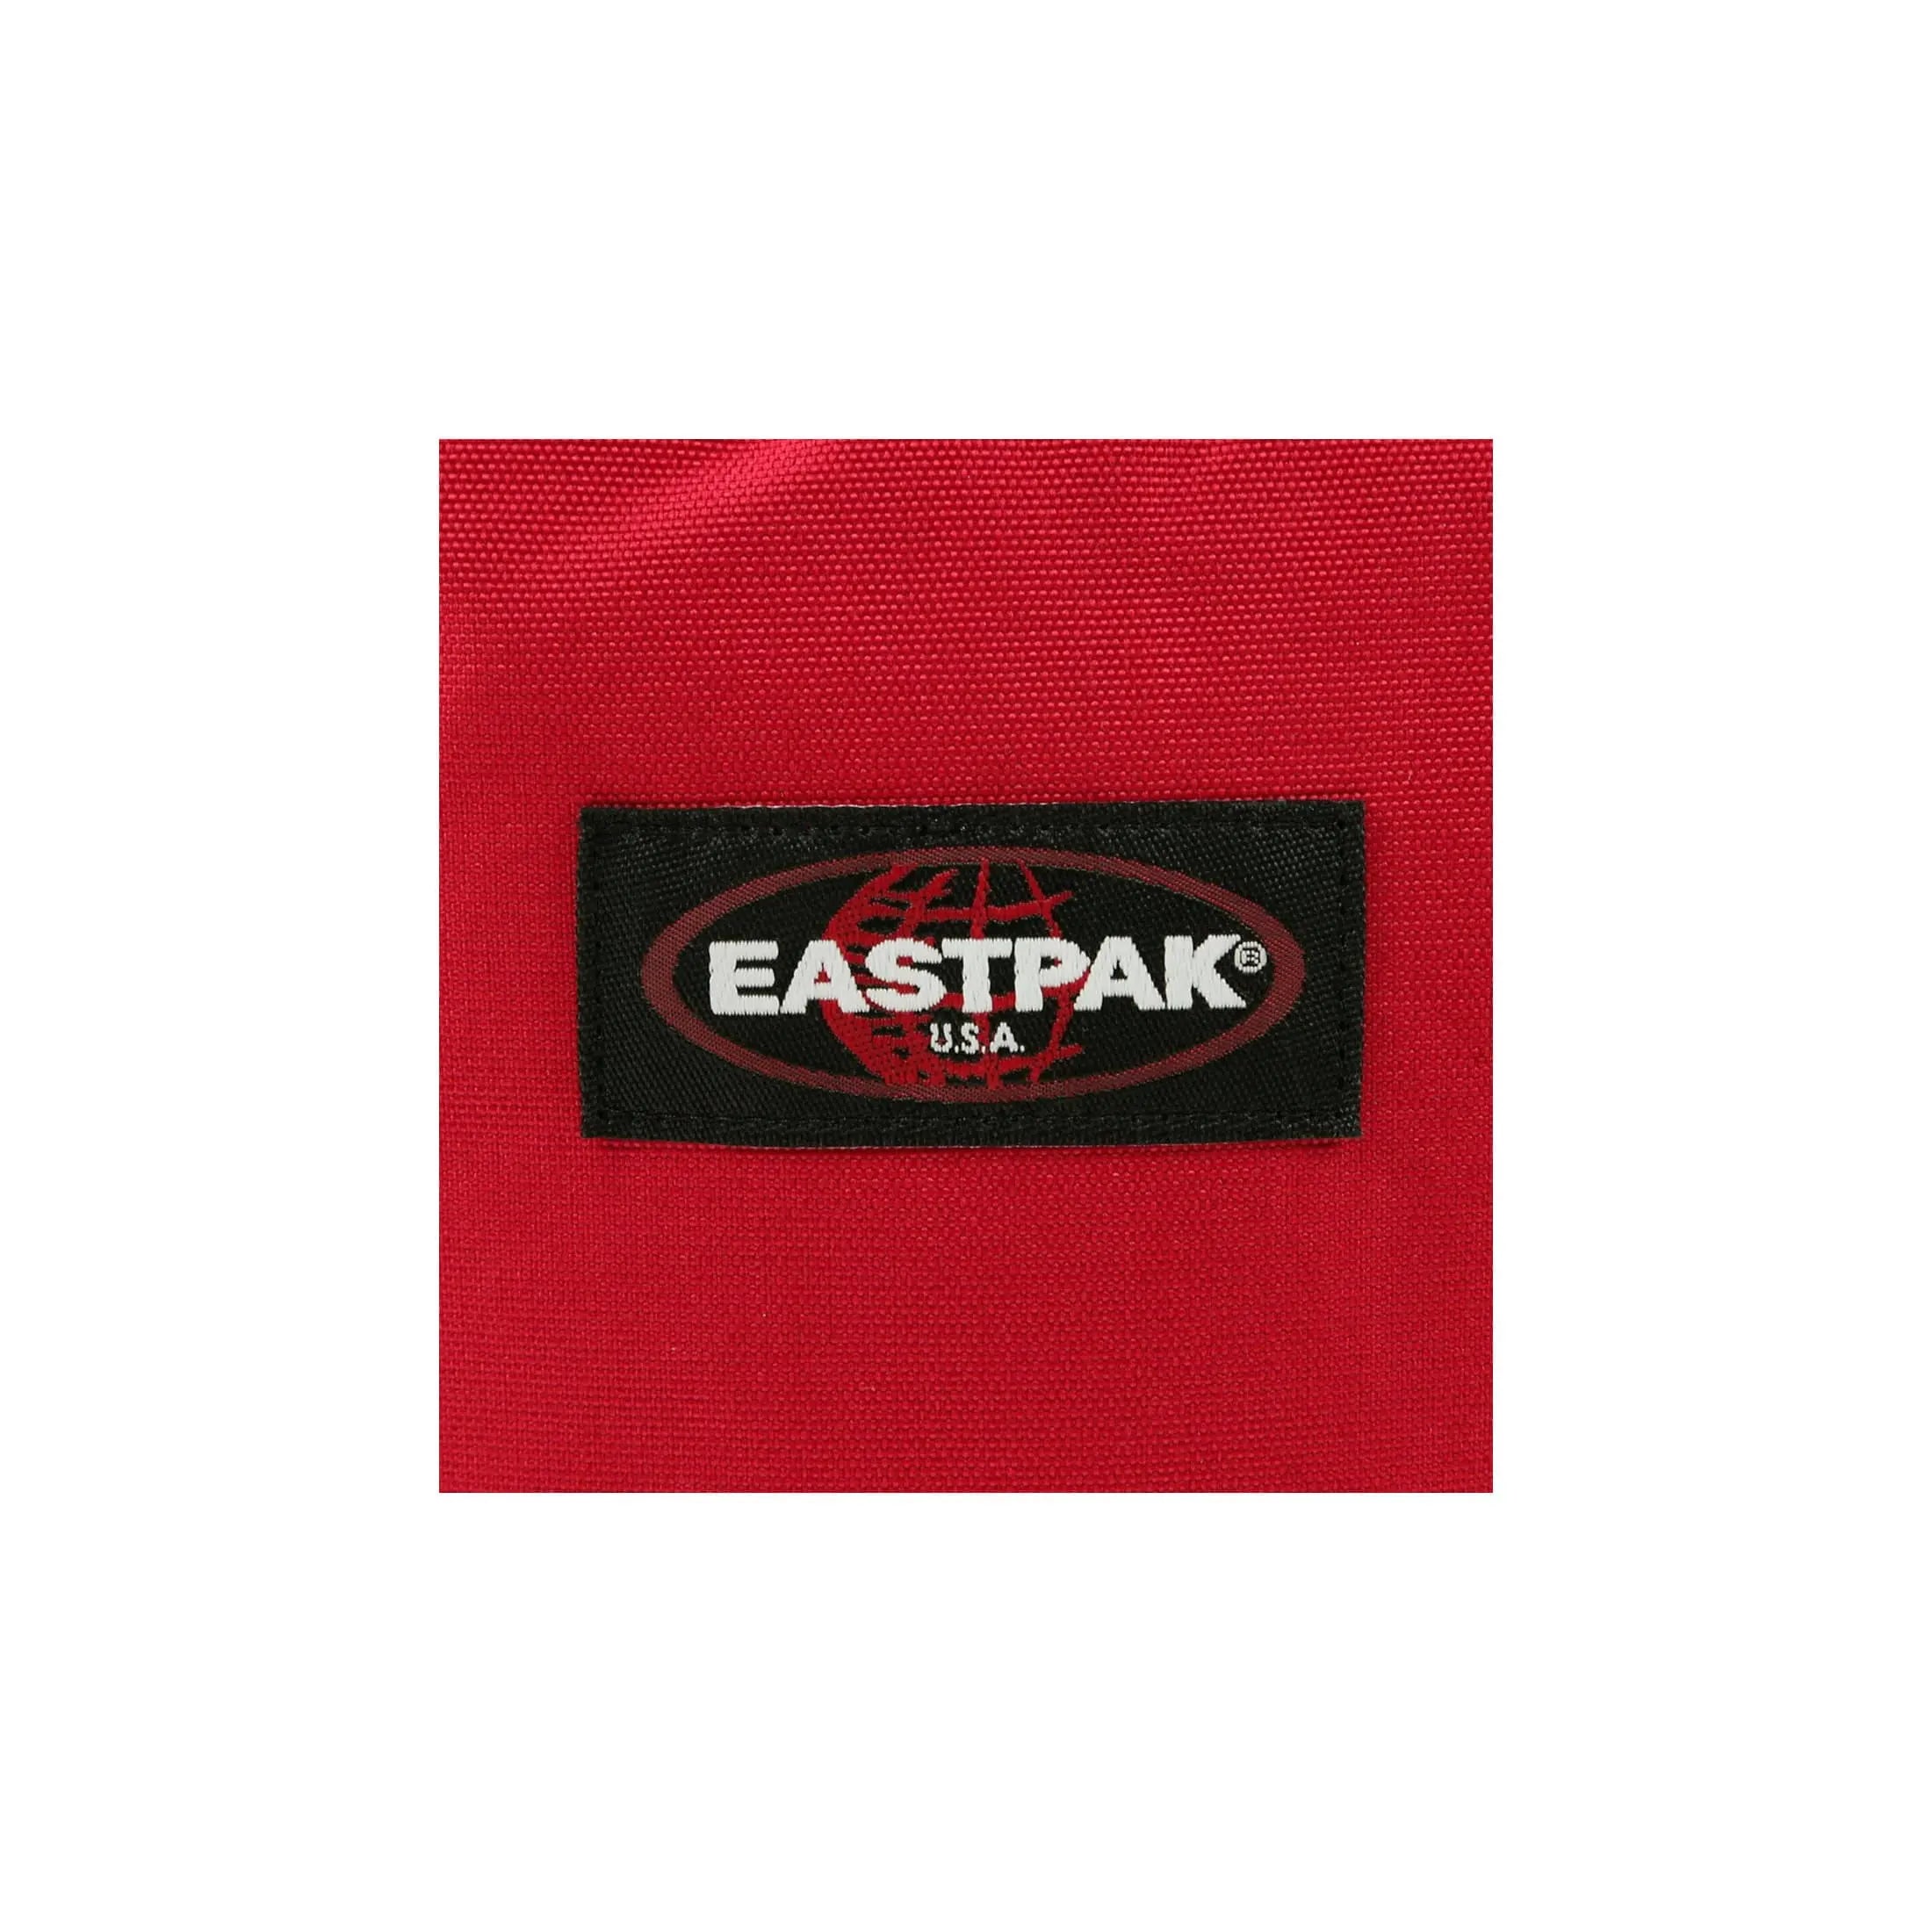 Eastpak Authentic Provider Laptop Backpack 44 cm - sunday gray